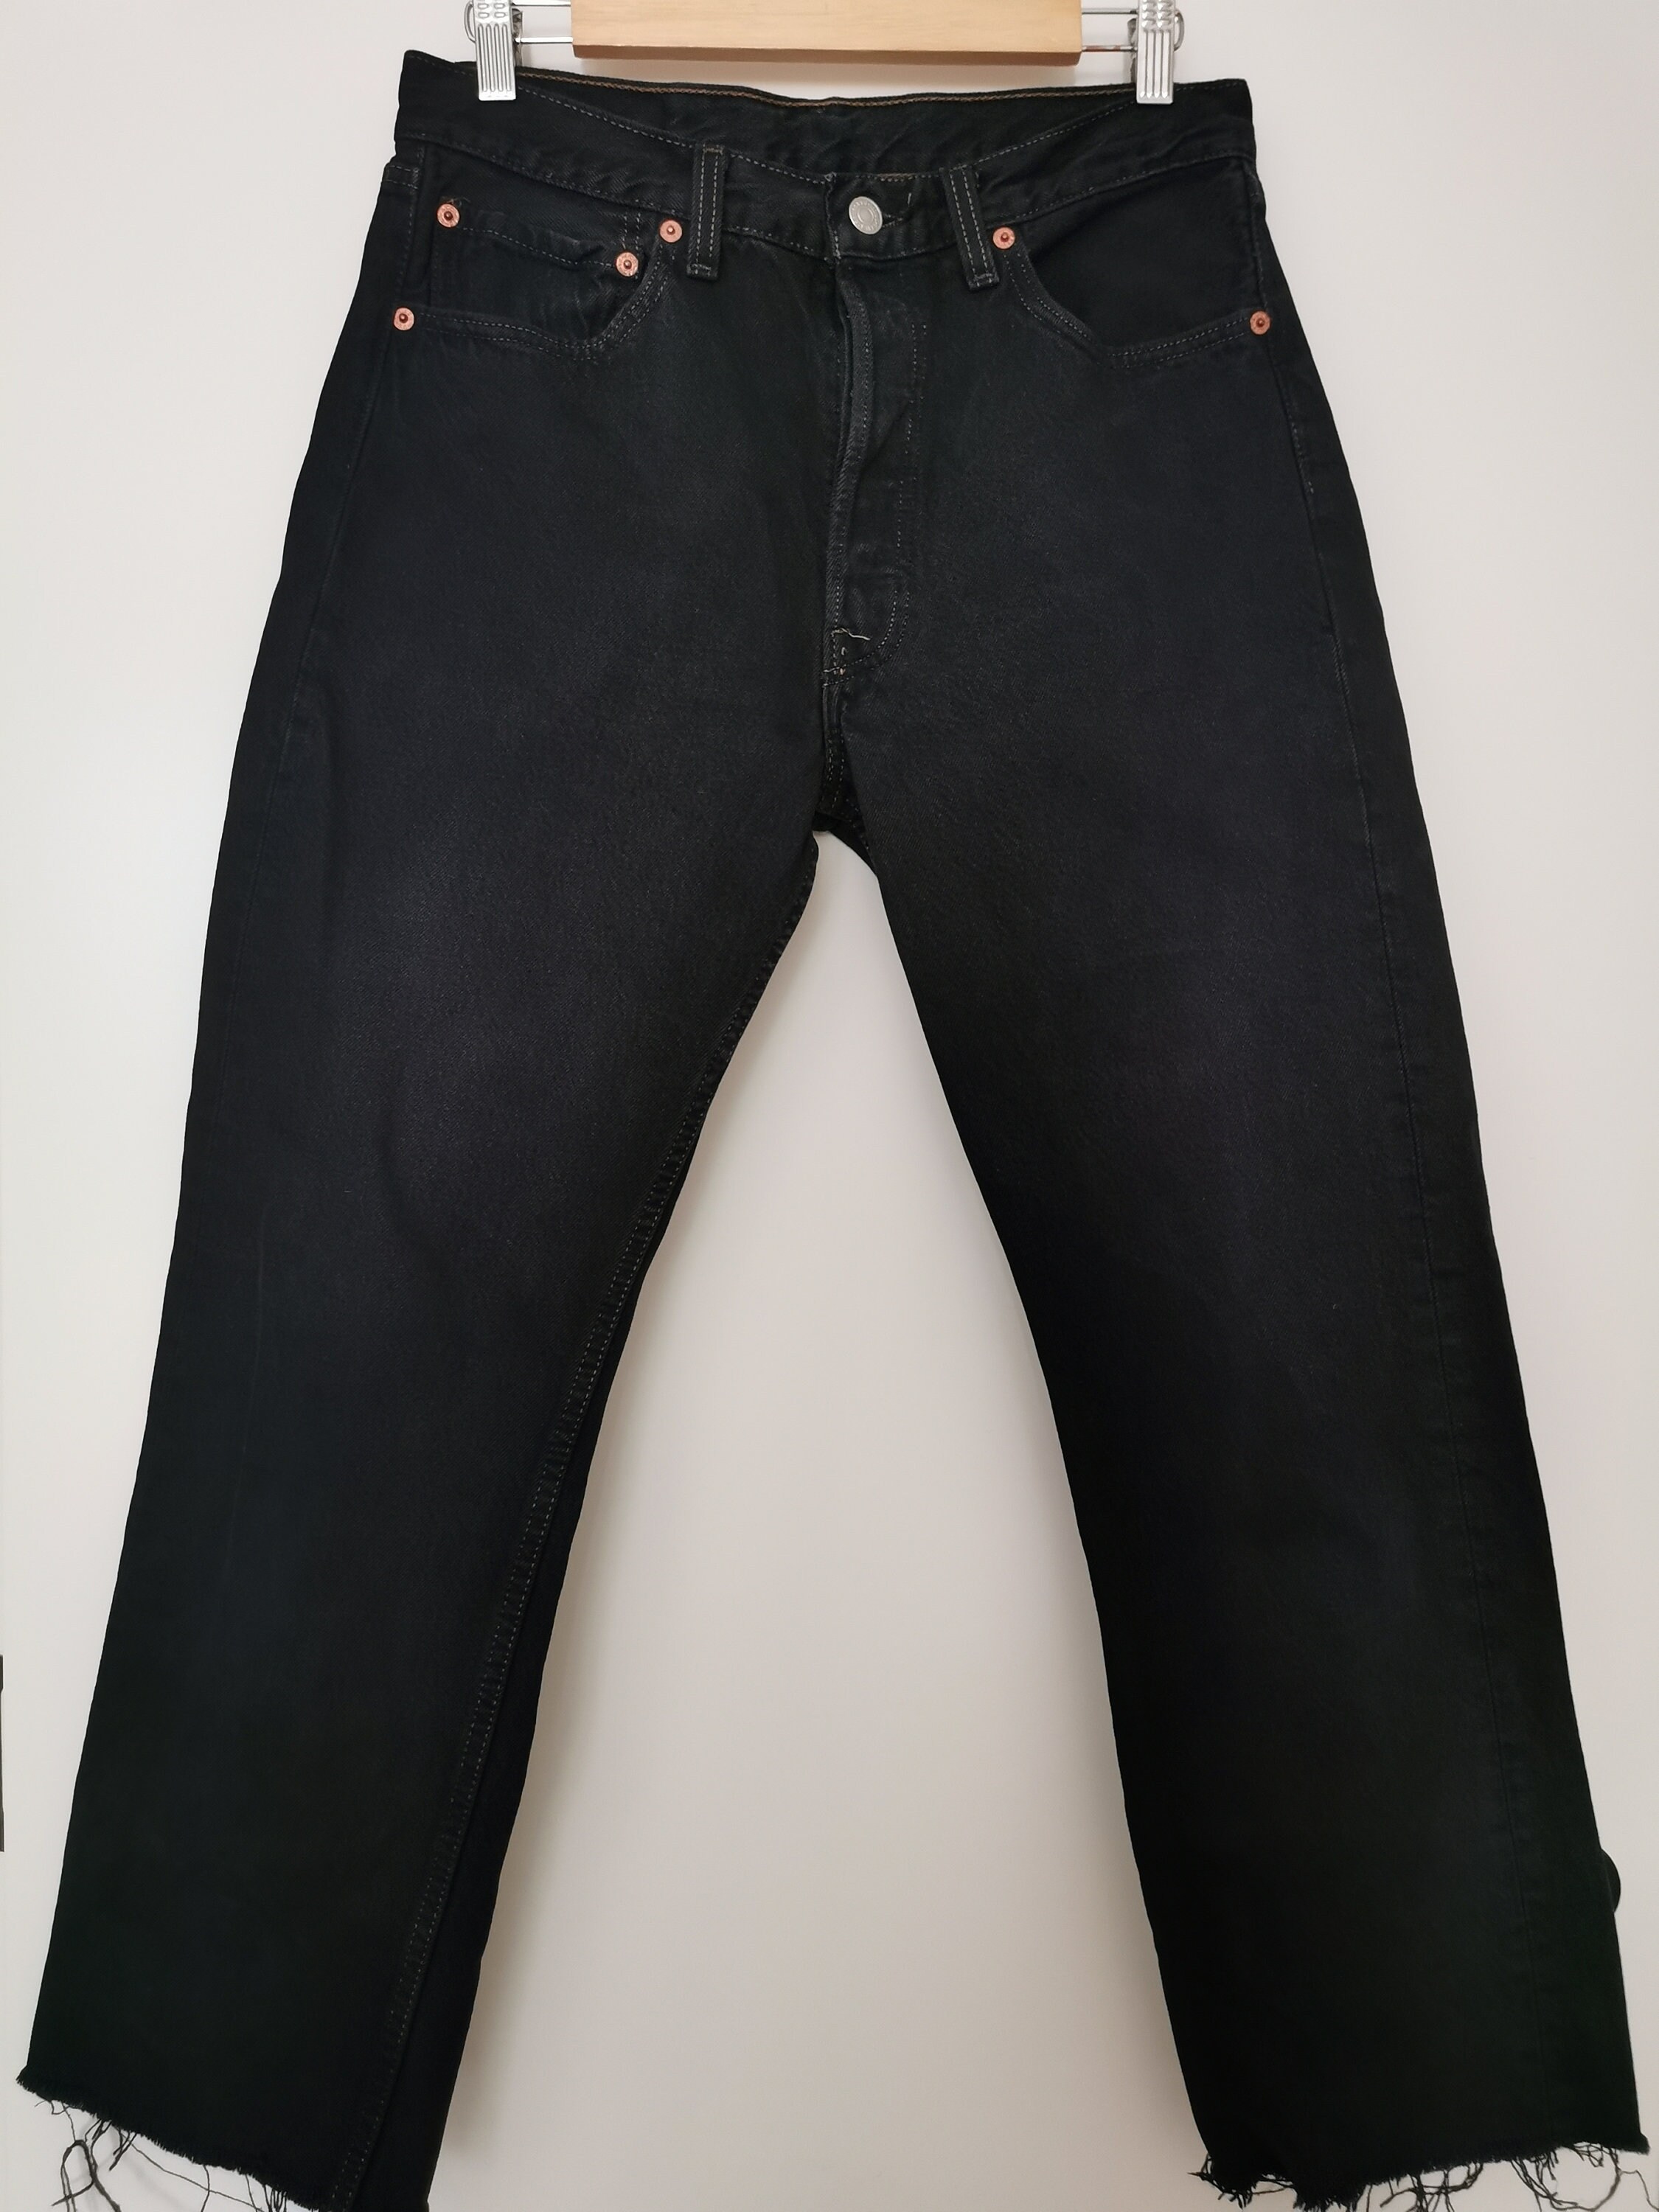 Vintage Levi's 501 Black Jeans 80's / 90's | Etsy